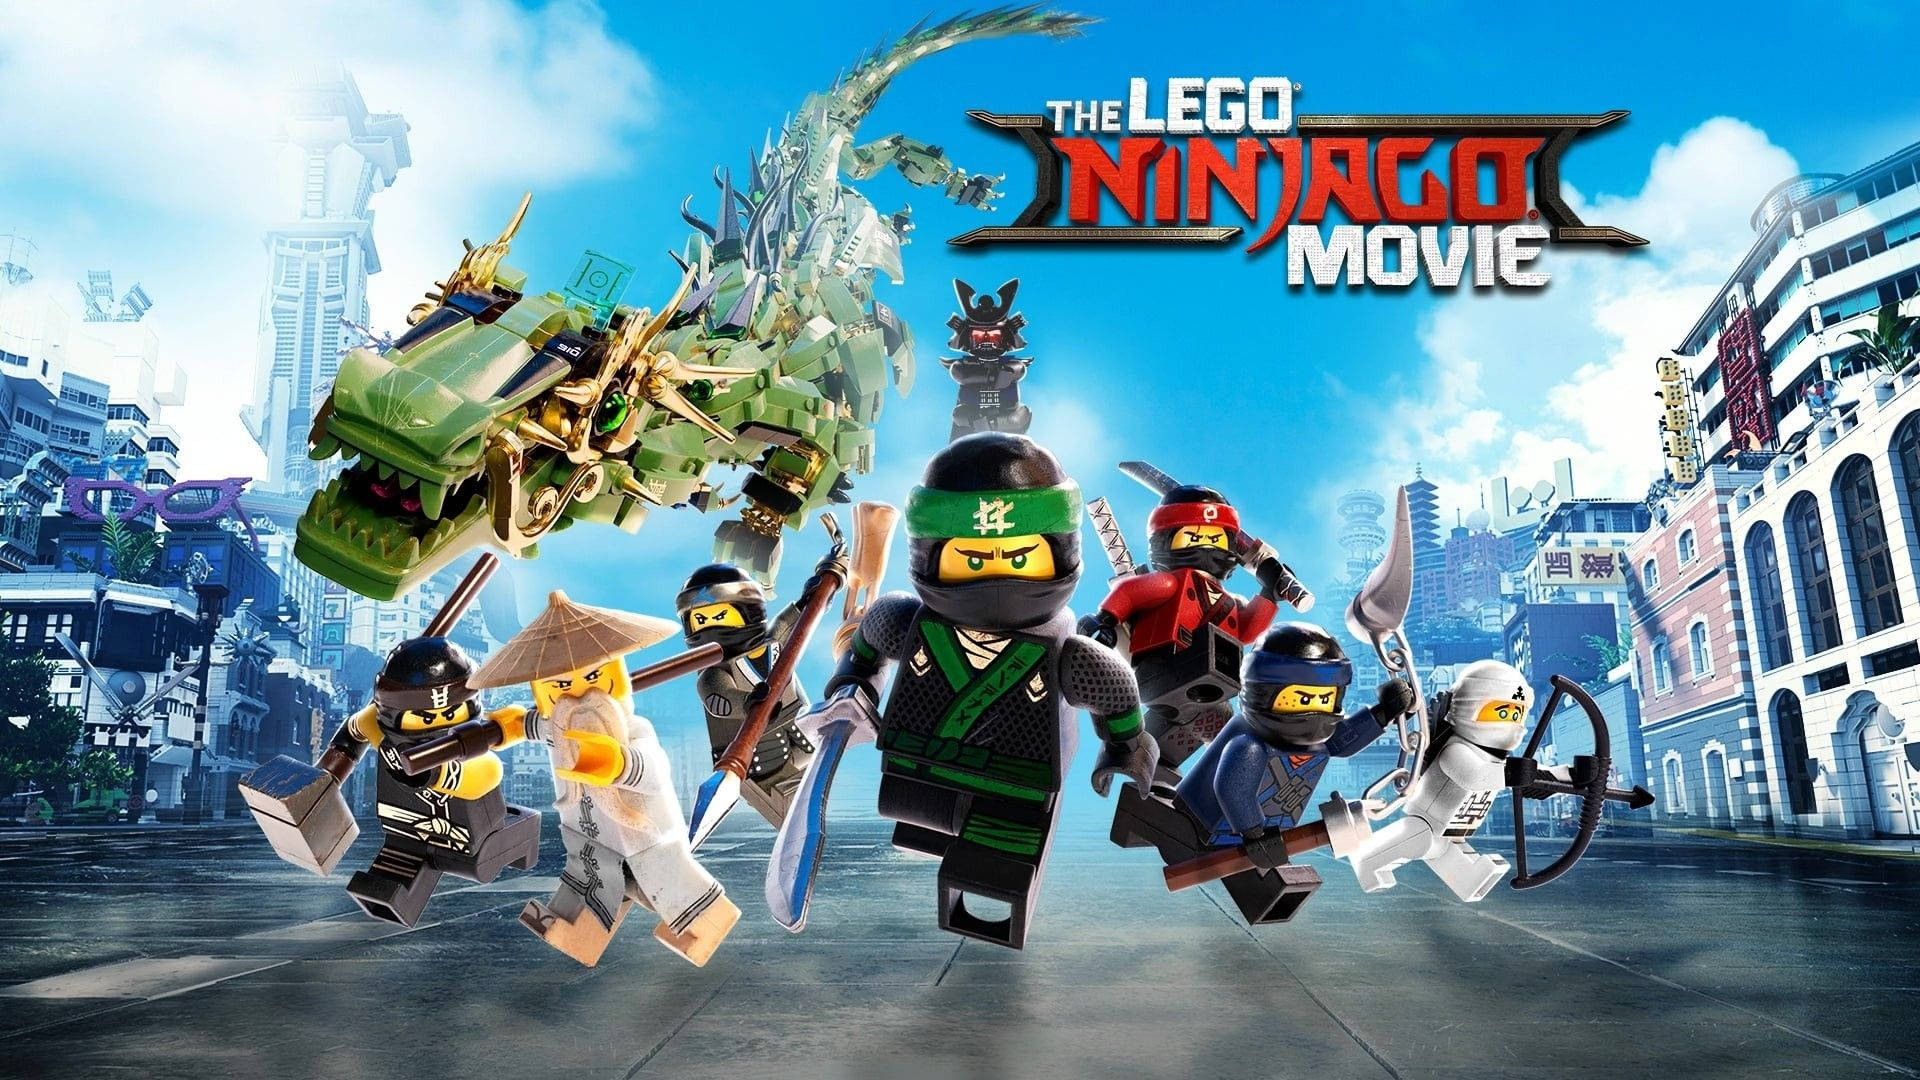 Free Lego Ninjago Wallpaper Downloads, [100+] Lego Ninjago Wallpapers for  FREE 